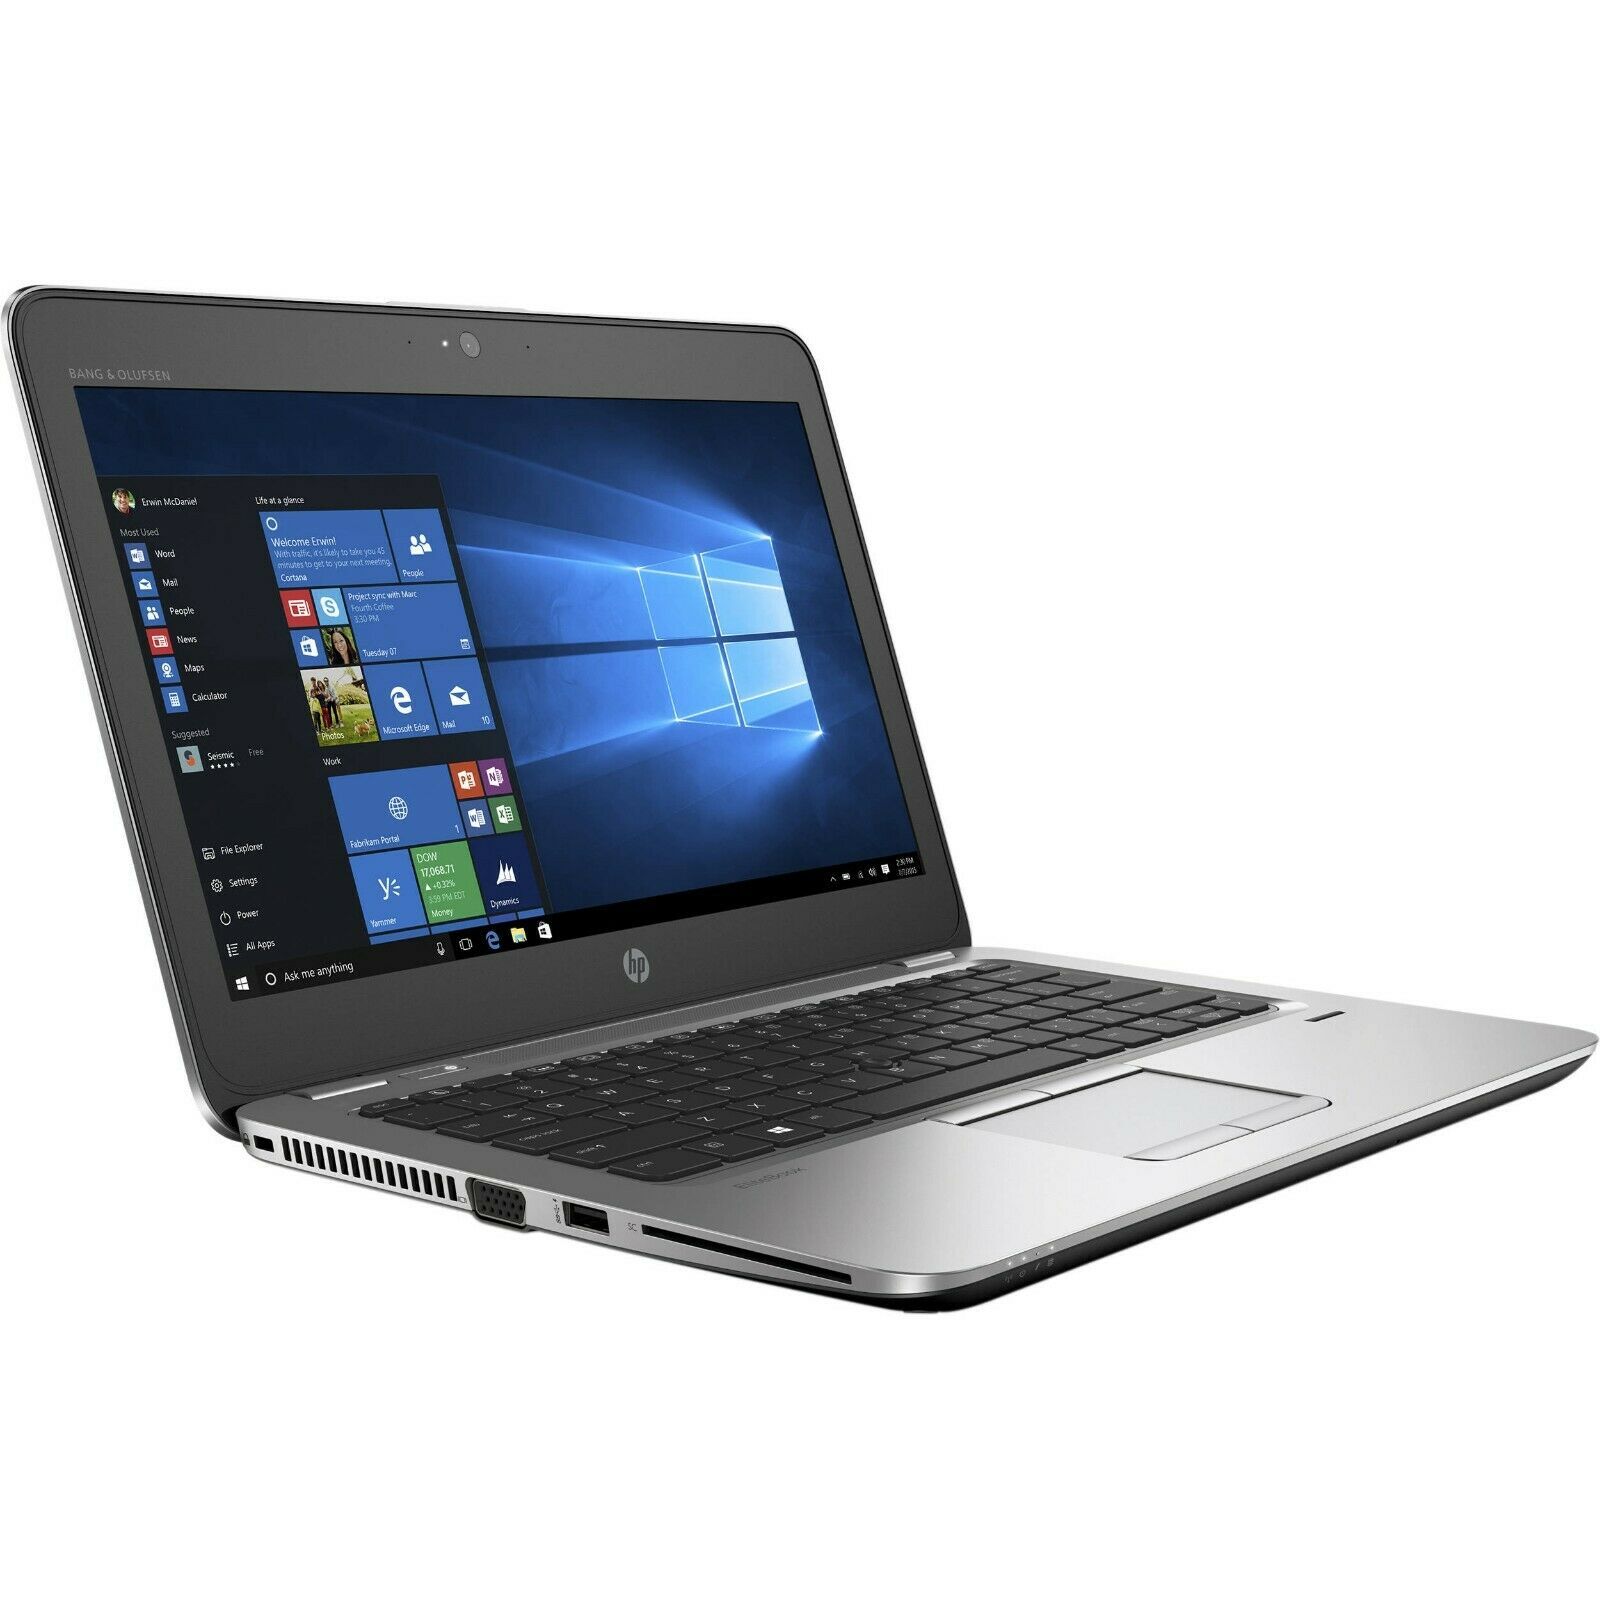 HP EliteBook 820 G3 Intel i7 6600U 2.60GHz 8GB RAM 500GB SSD 12.5" Win 10 - B Grade Image 2